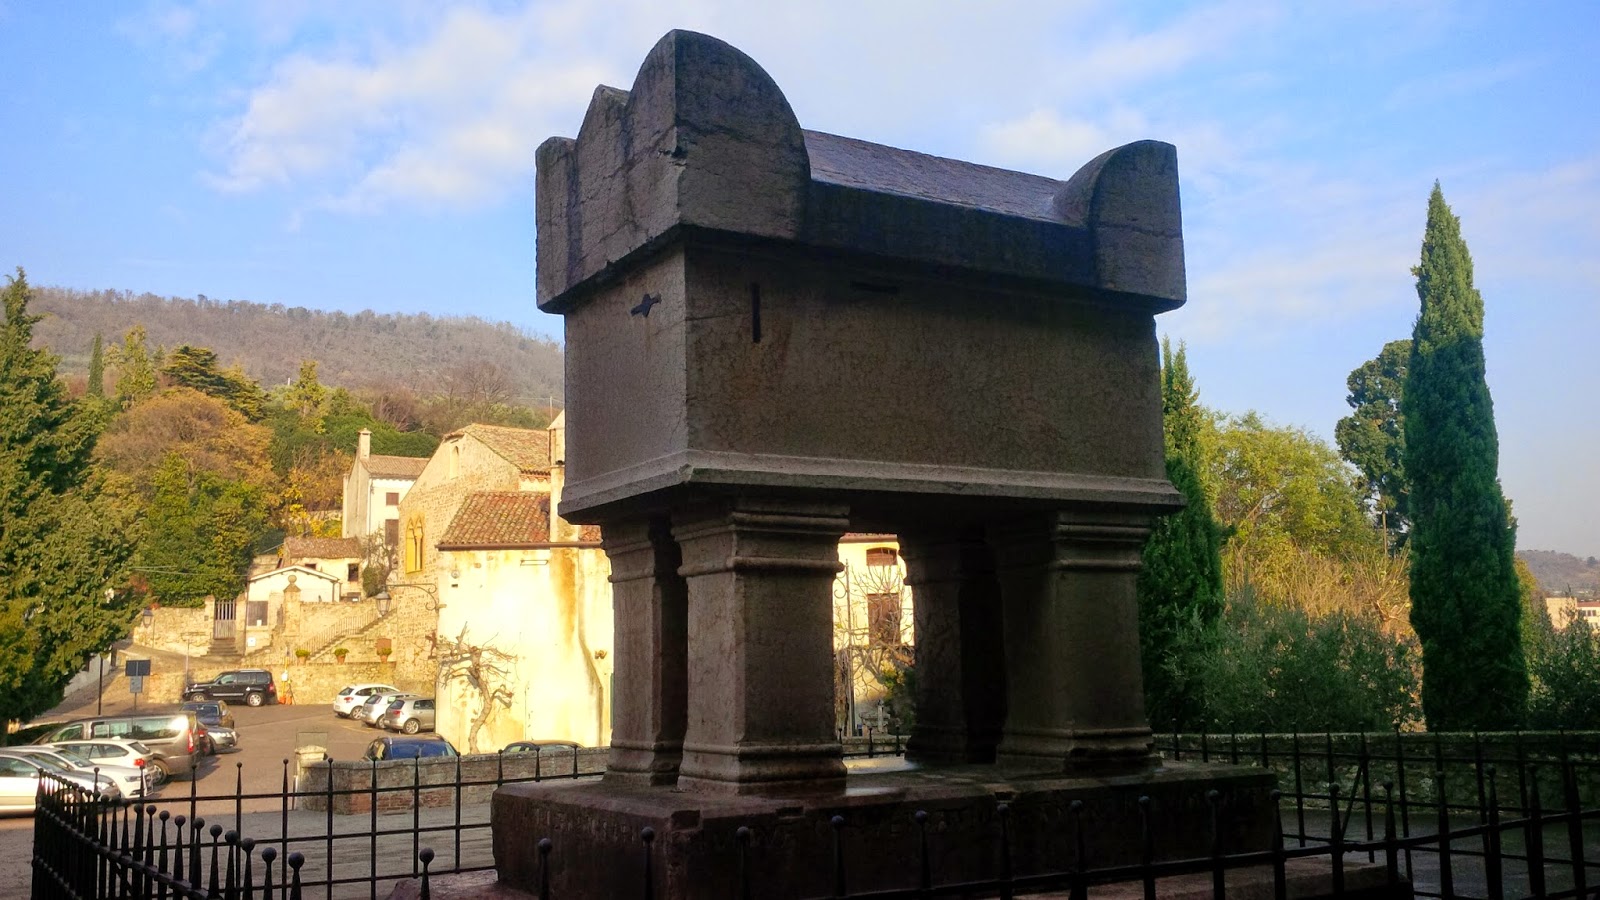 The tomb of Francesco Petrarch in the village of Arqua Petrarca